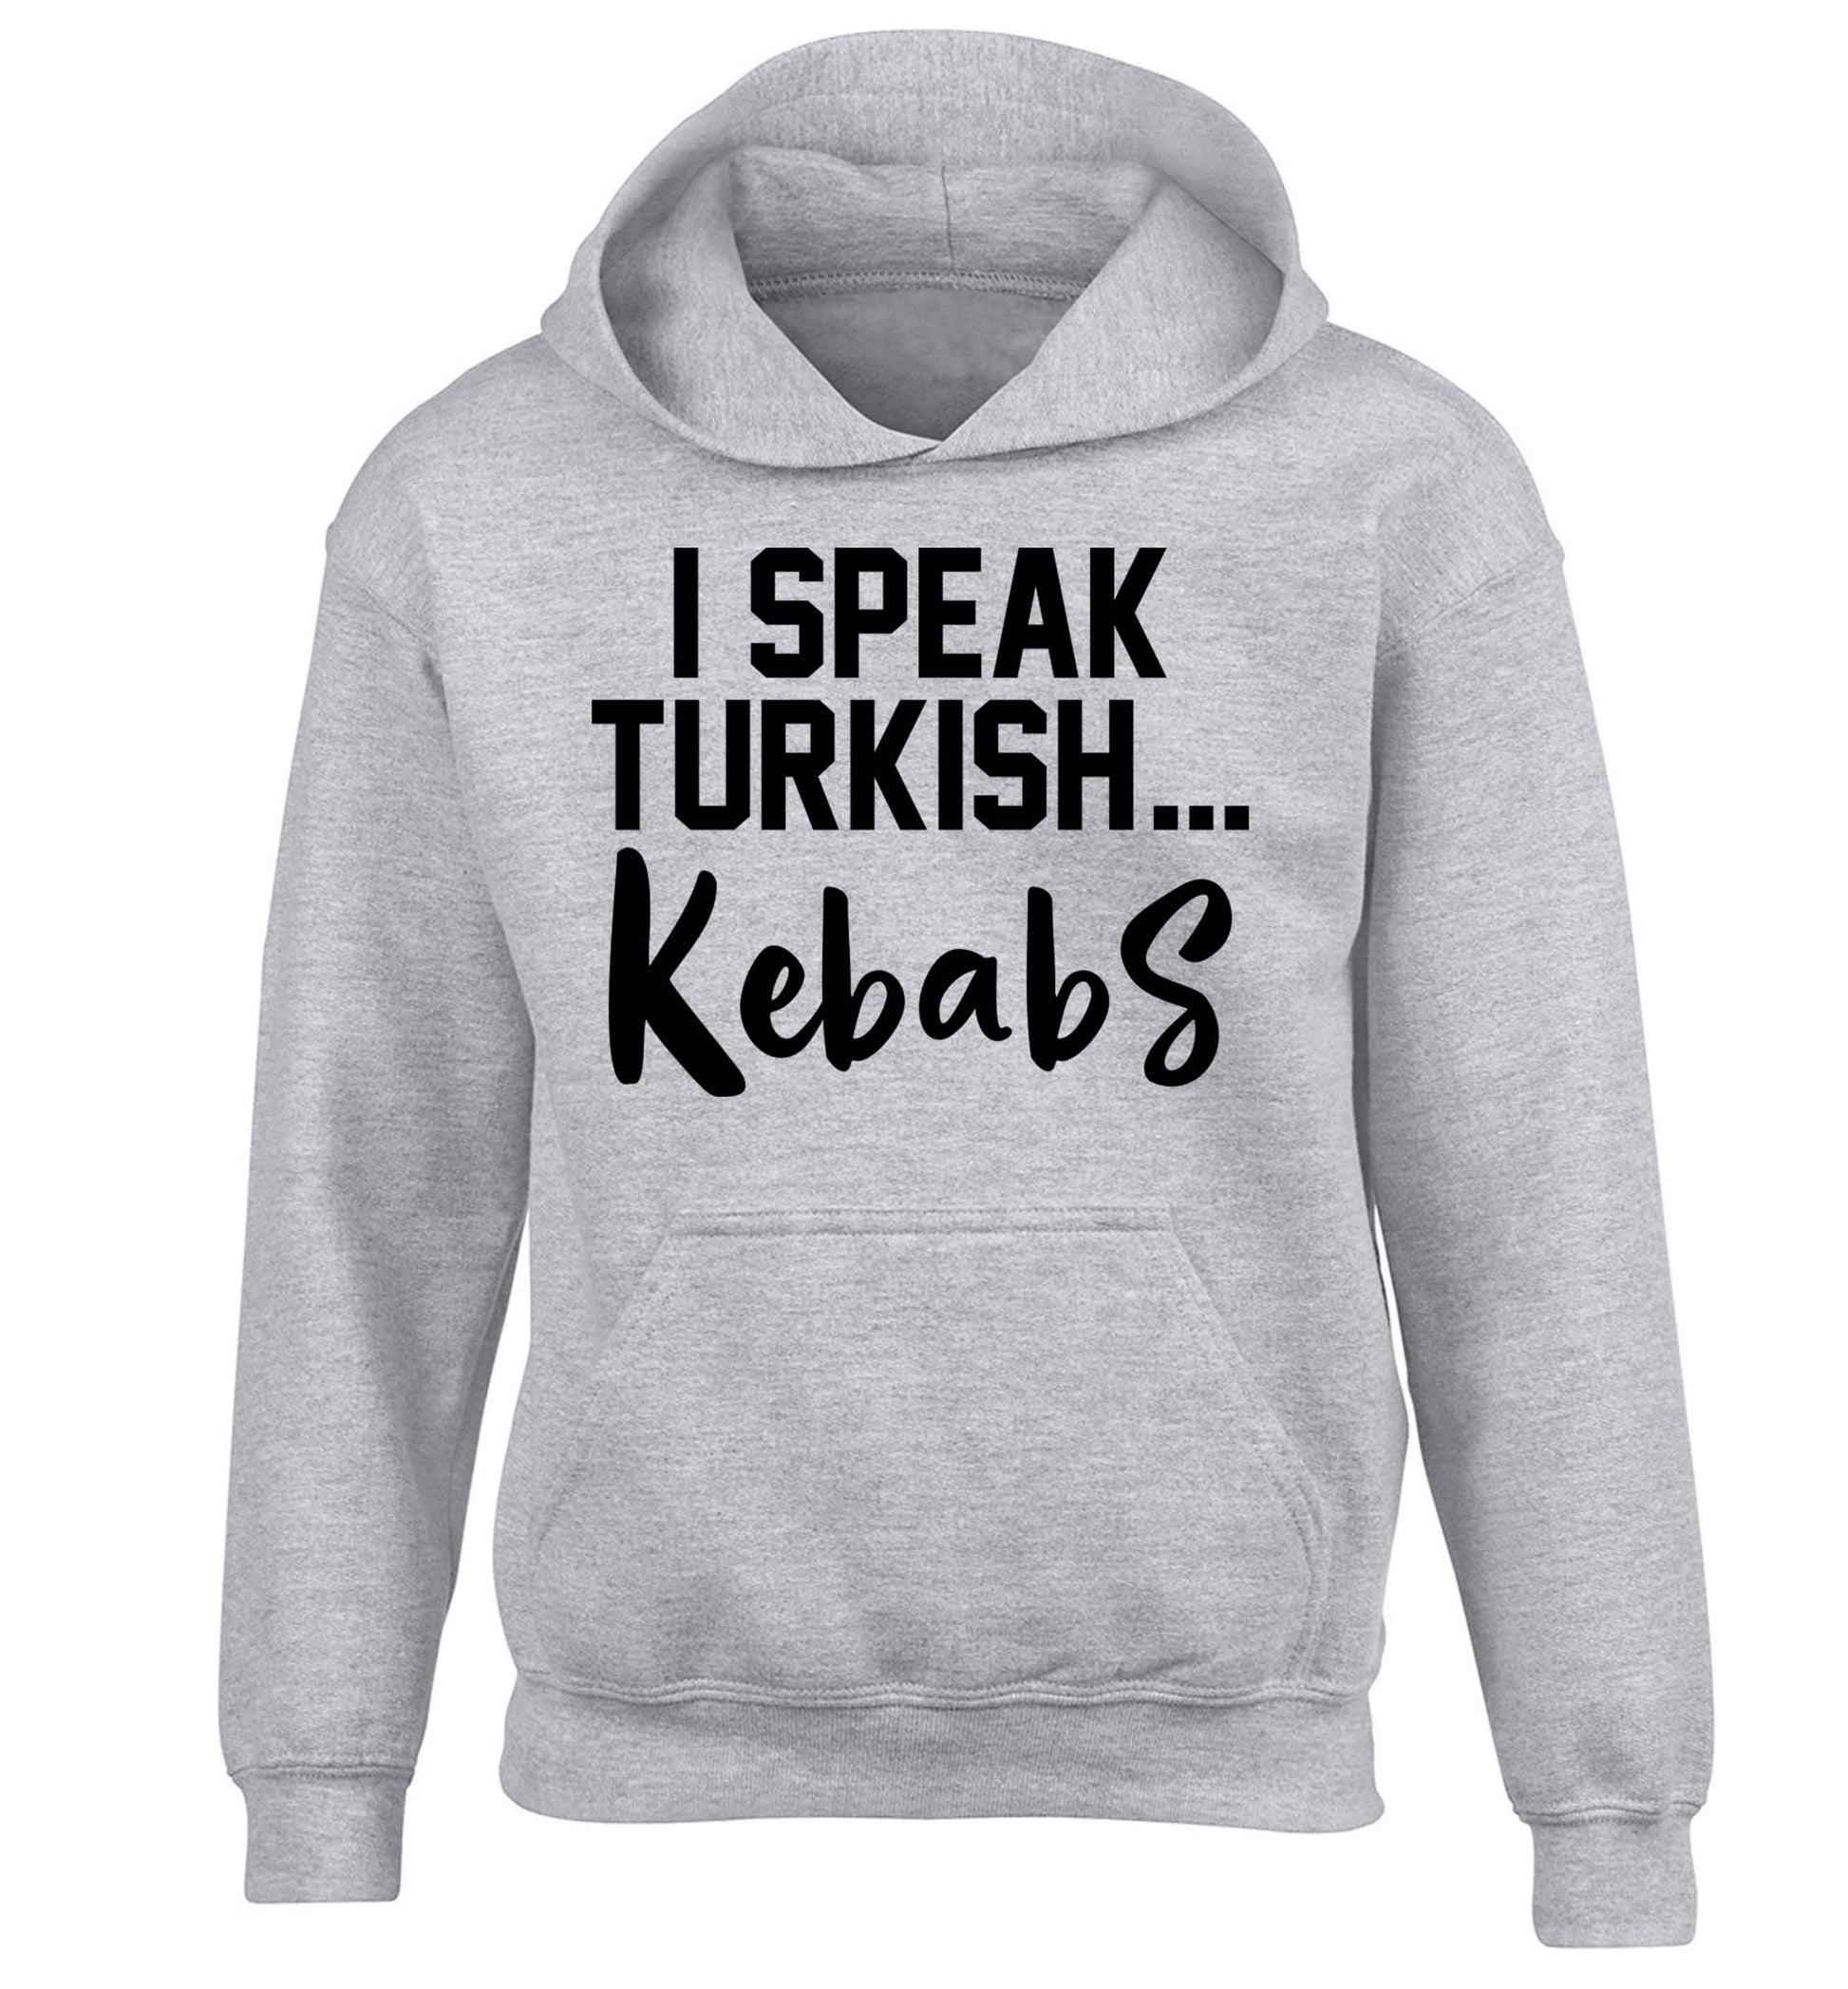 I speak Turkish...kebabs children's grey hoodie 12-13 Years